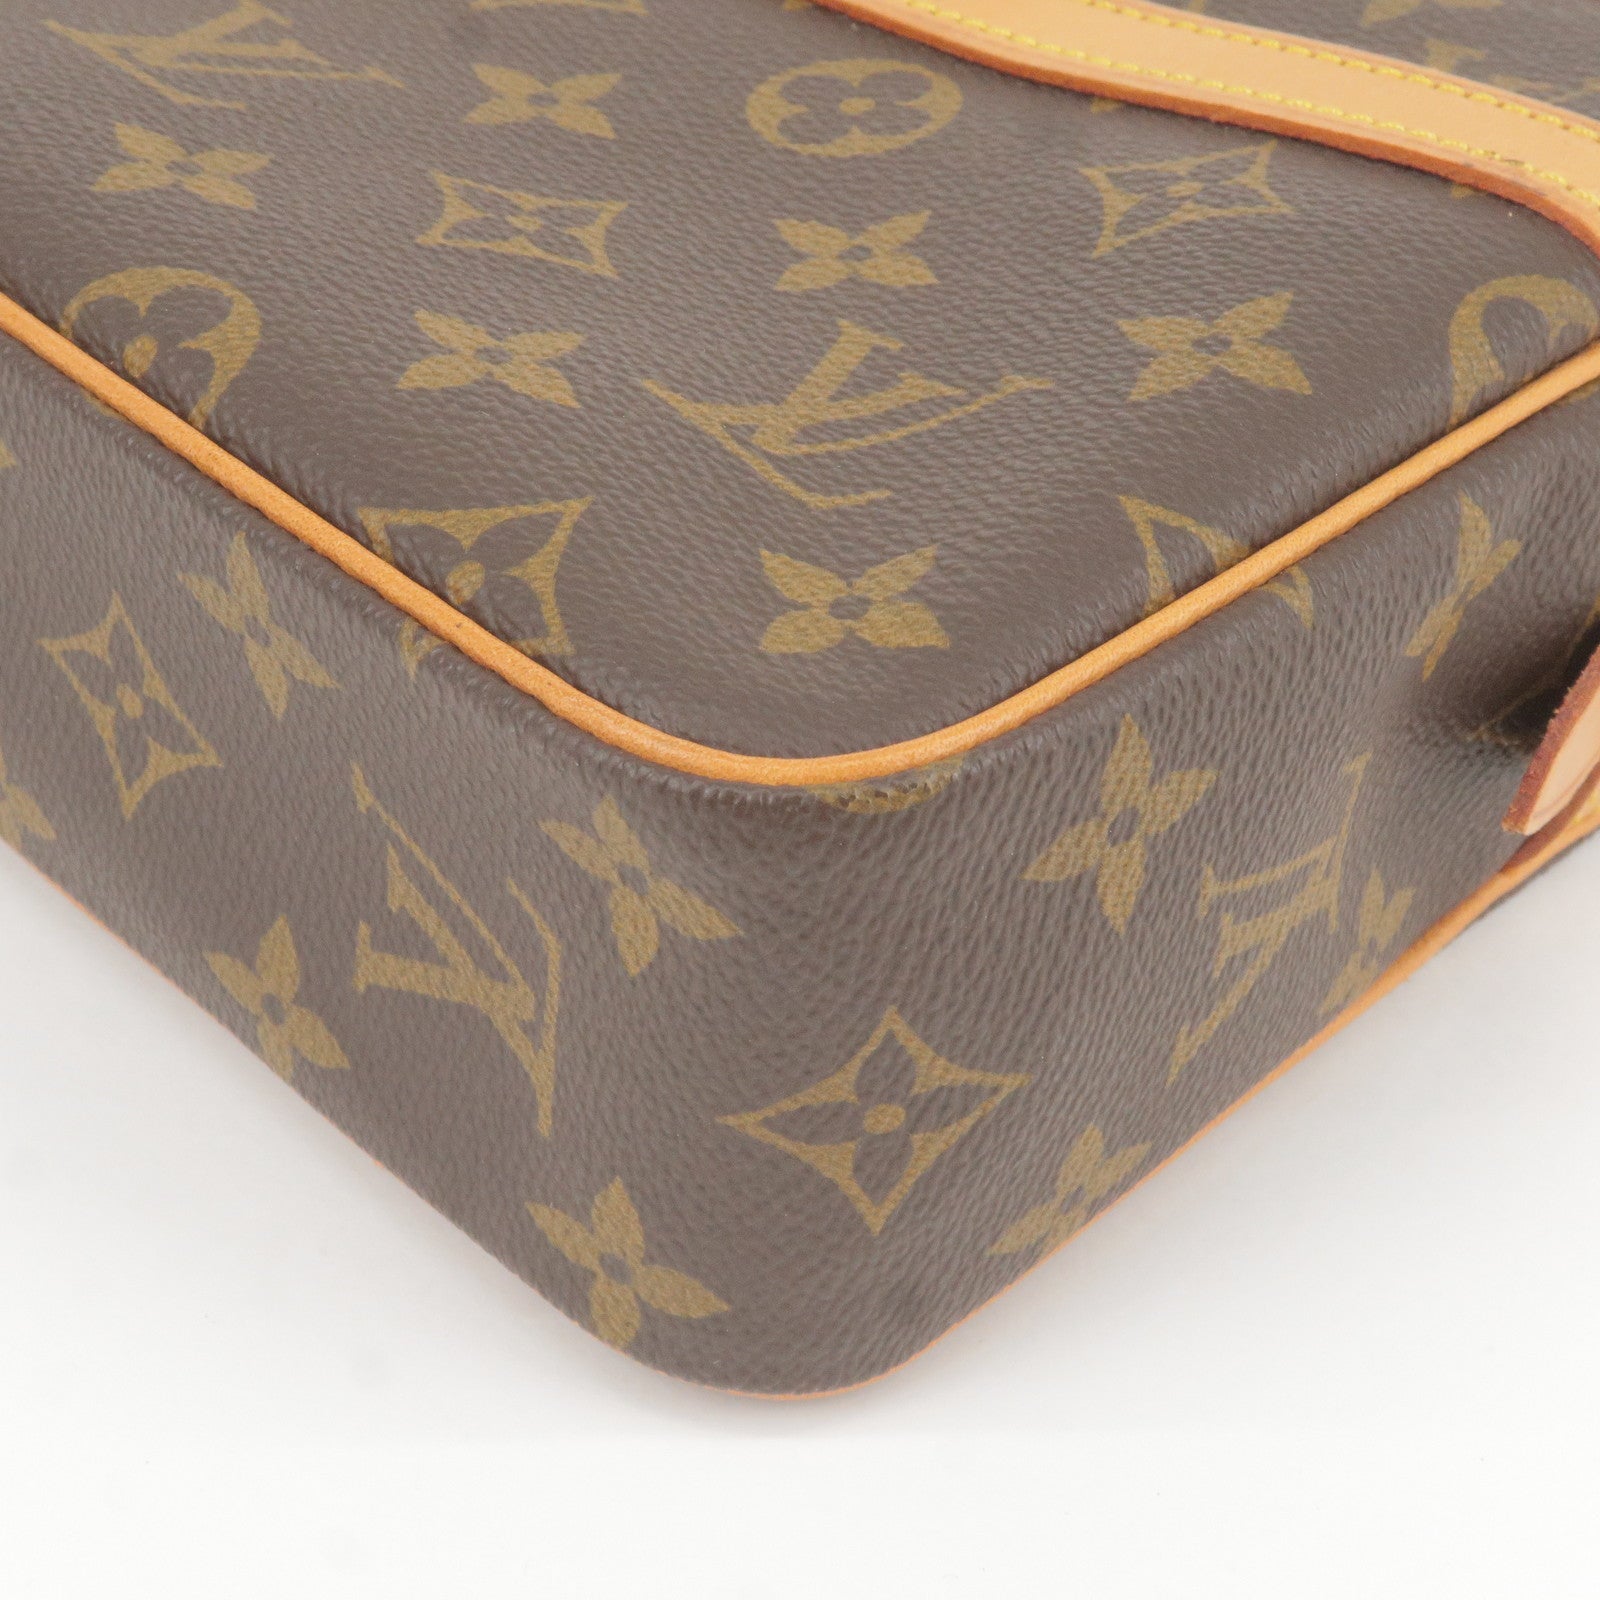 Louis Vuitton Video Clutch Bag